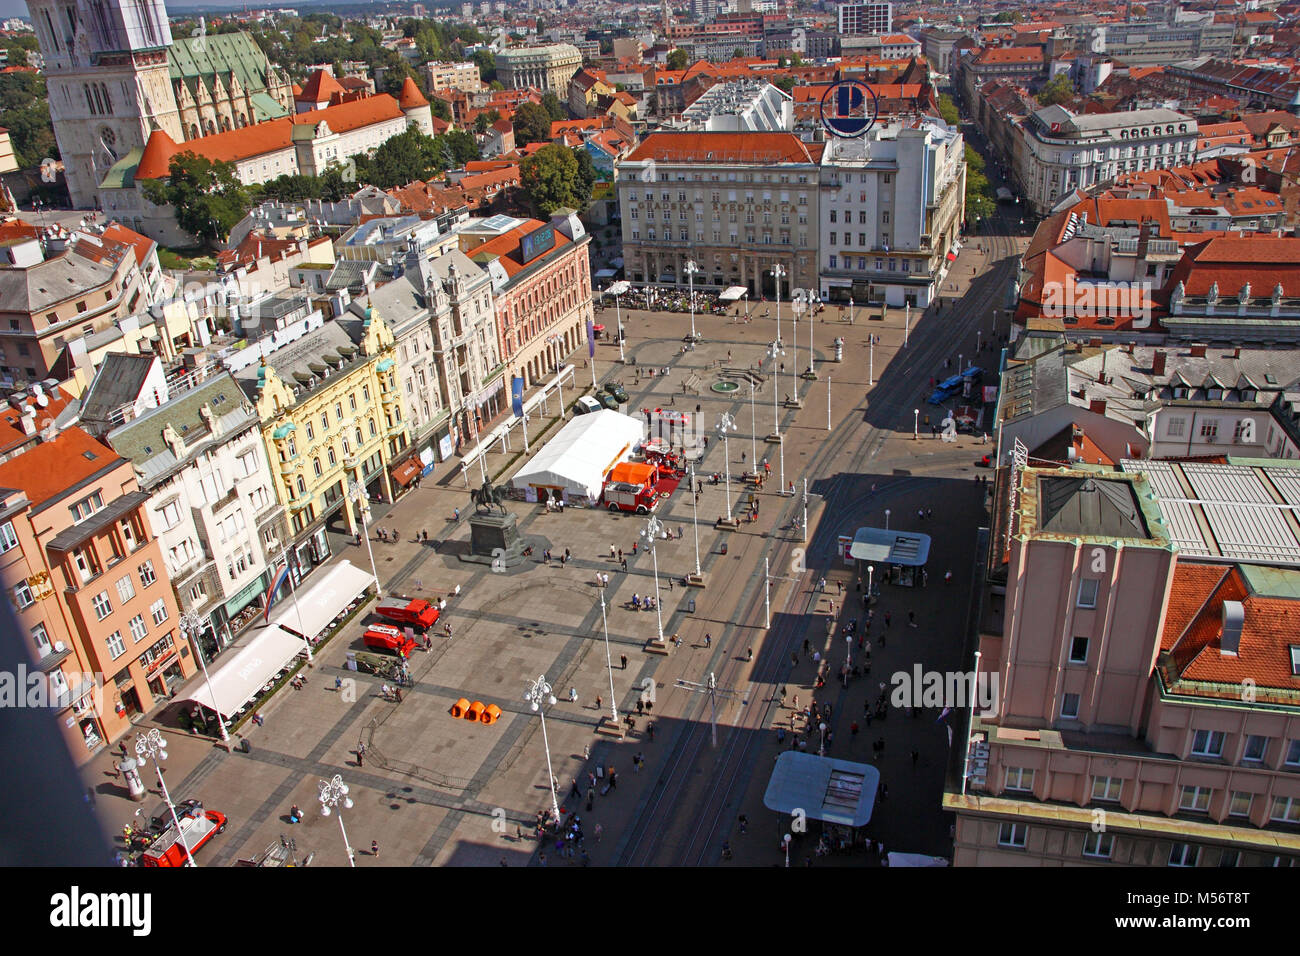 Kroatien Zagreb, 25. SEPTEMBER 2016: Blick auf Ban Jelacic Platz, dem zentralen Platz der Stadt Zagreb, Kroatien Stockfoto